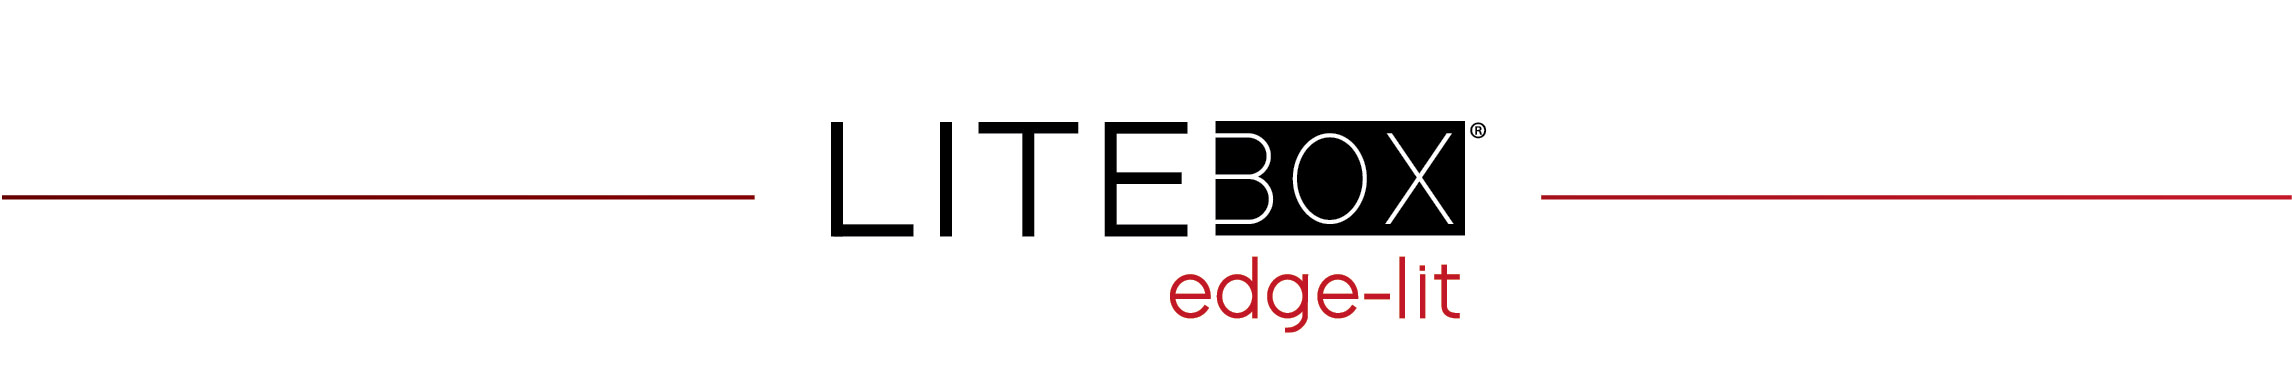 LITEBOX logo divider